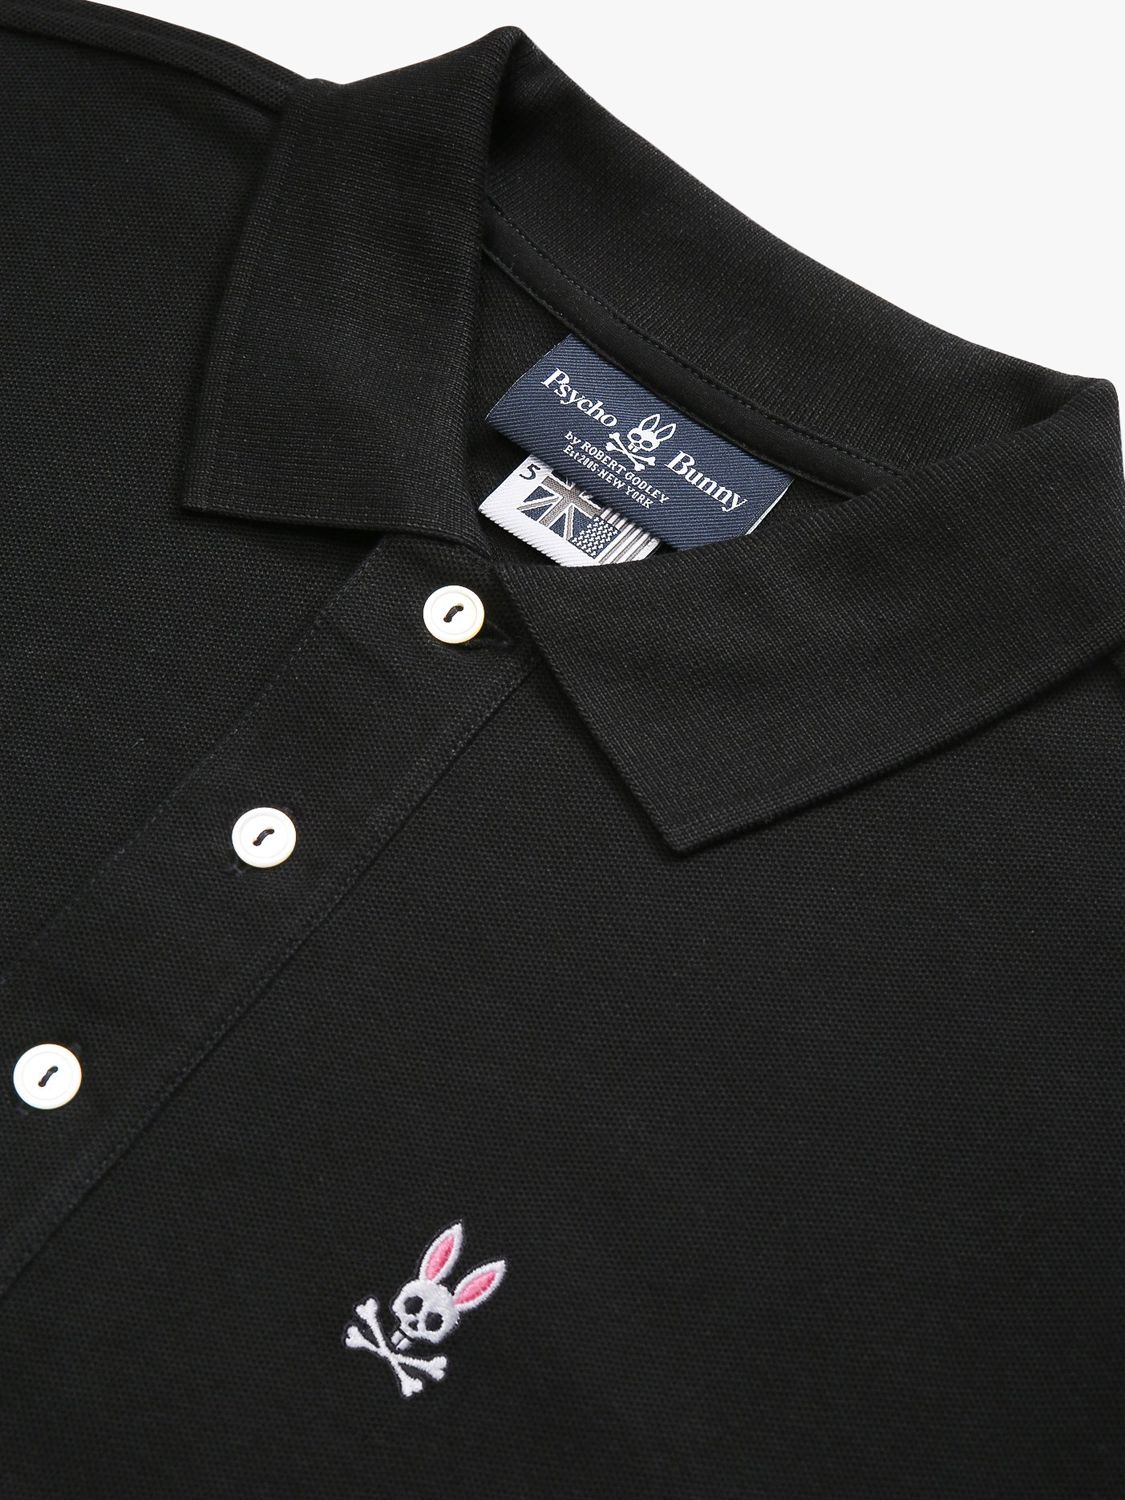 Psycho Bunny Classic Long Sleeve Pique Polo Shirt, Black, S